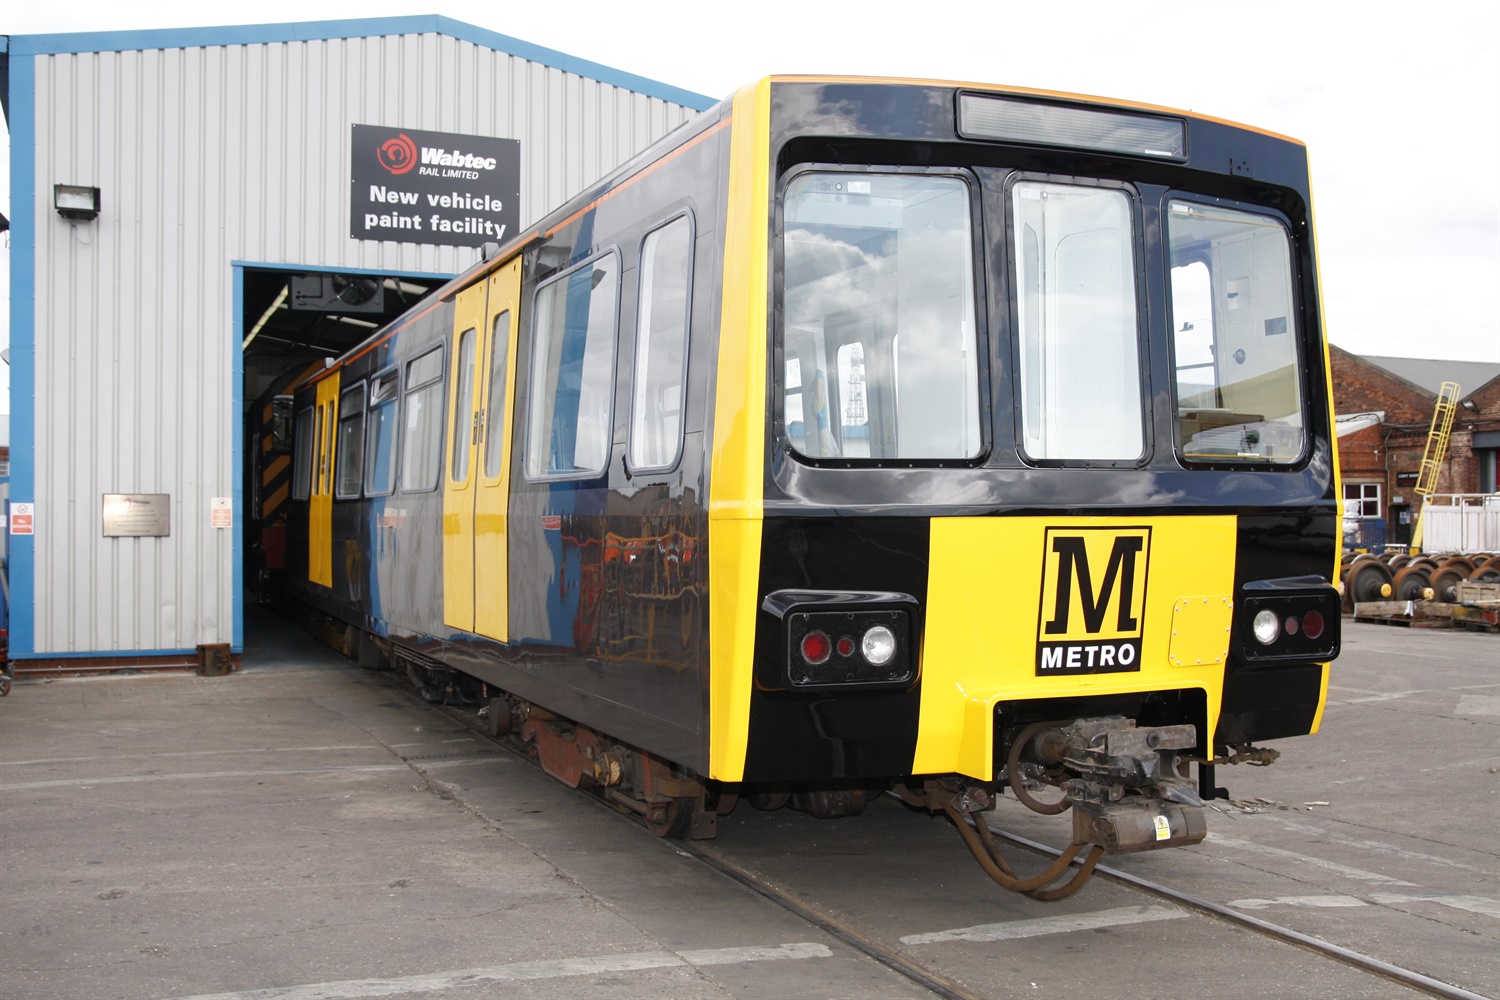 Tyne & Wear Metro gets £40m modernisation works this year